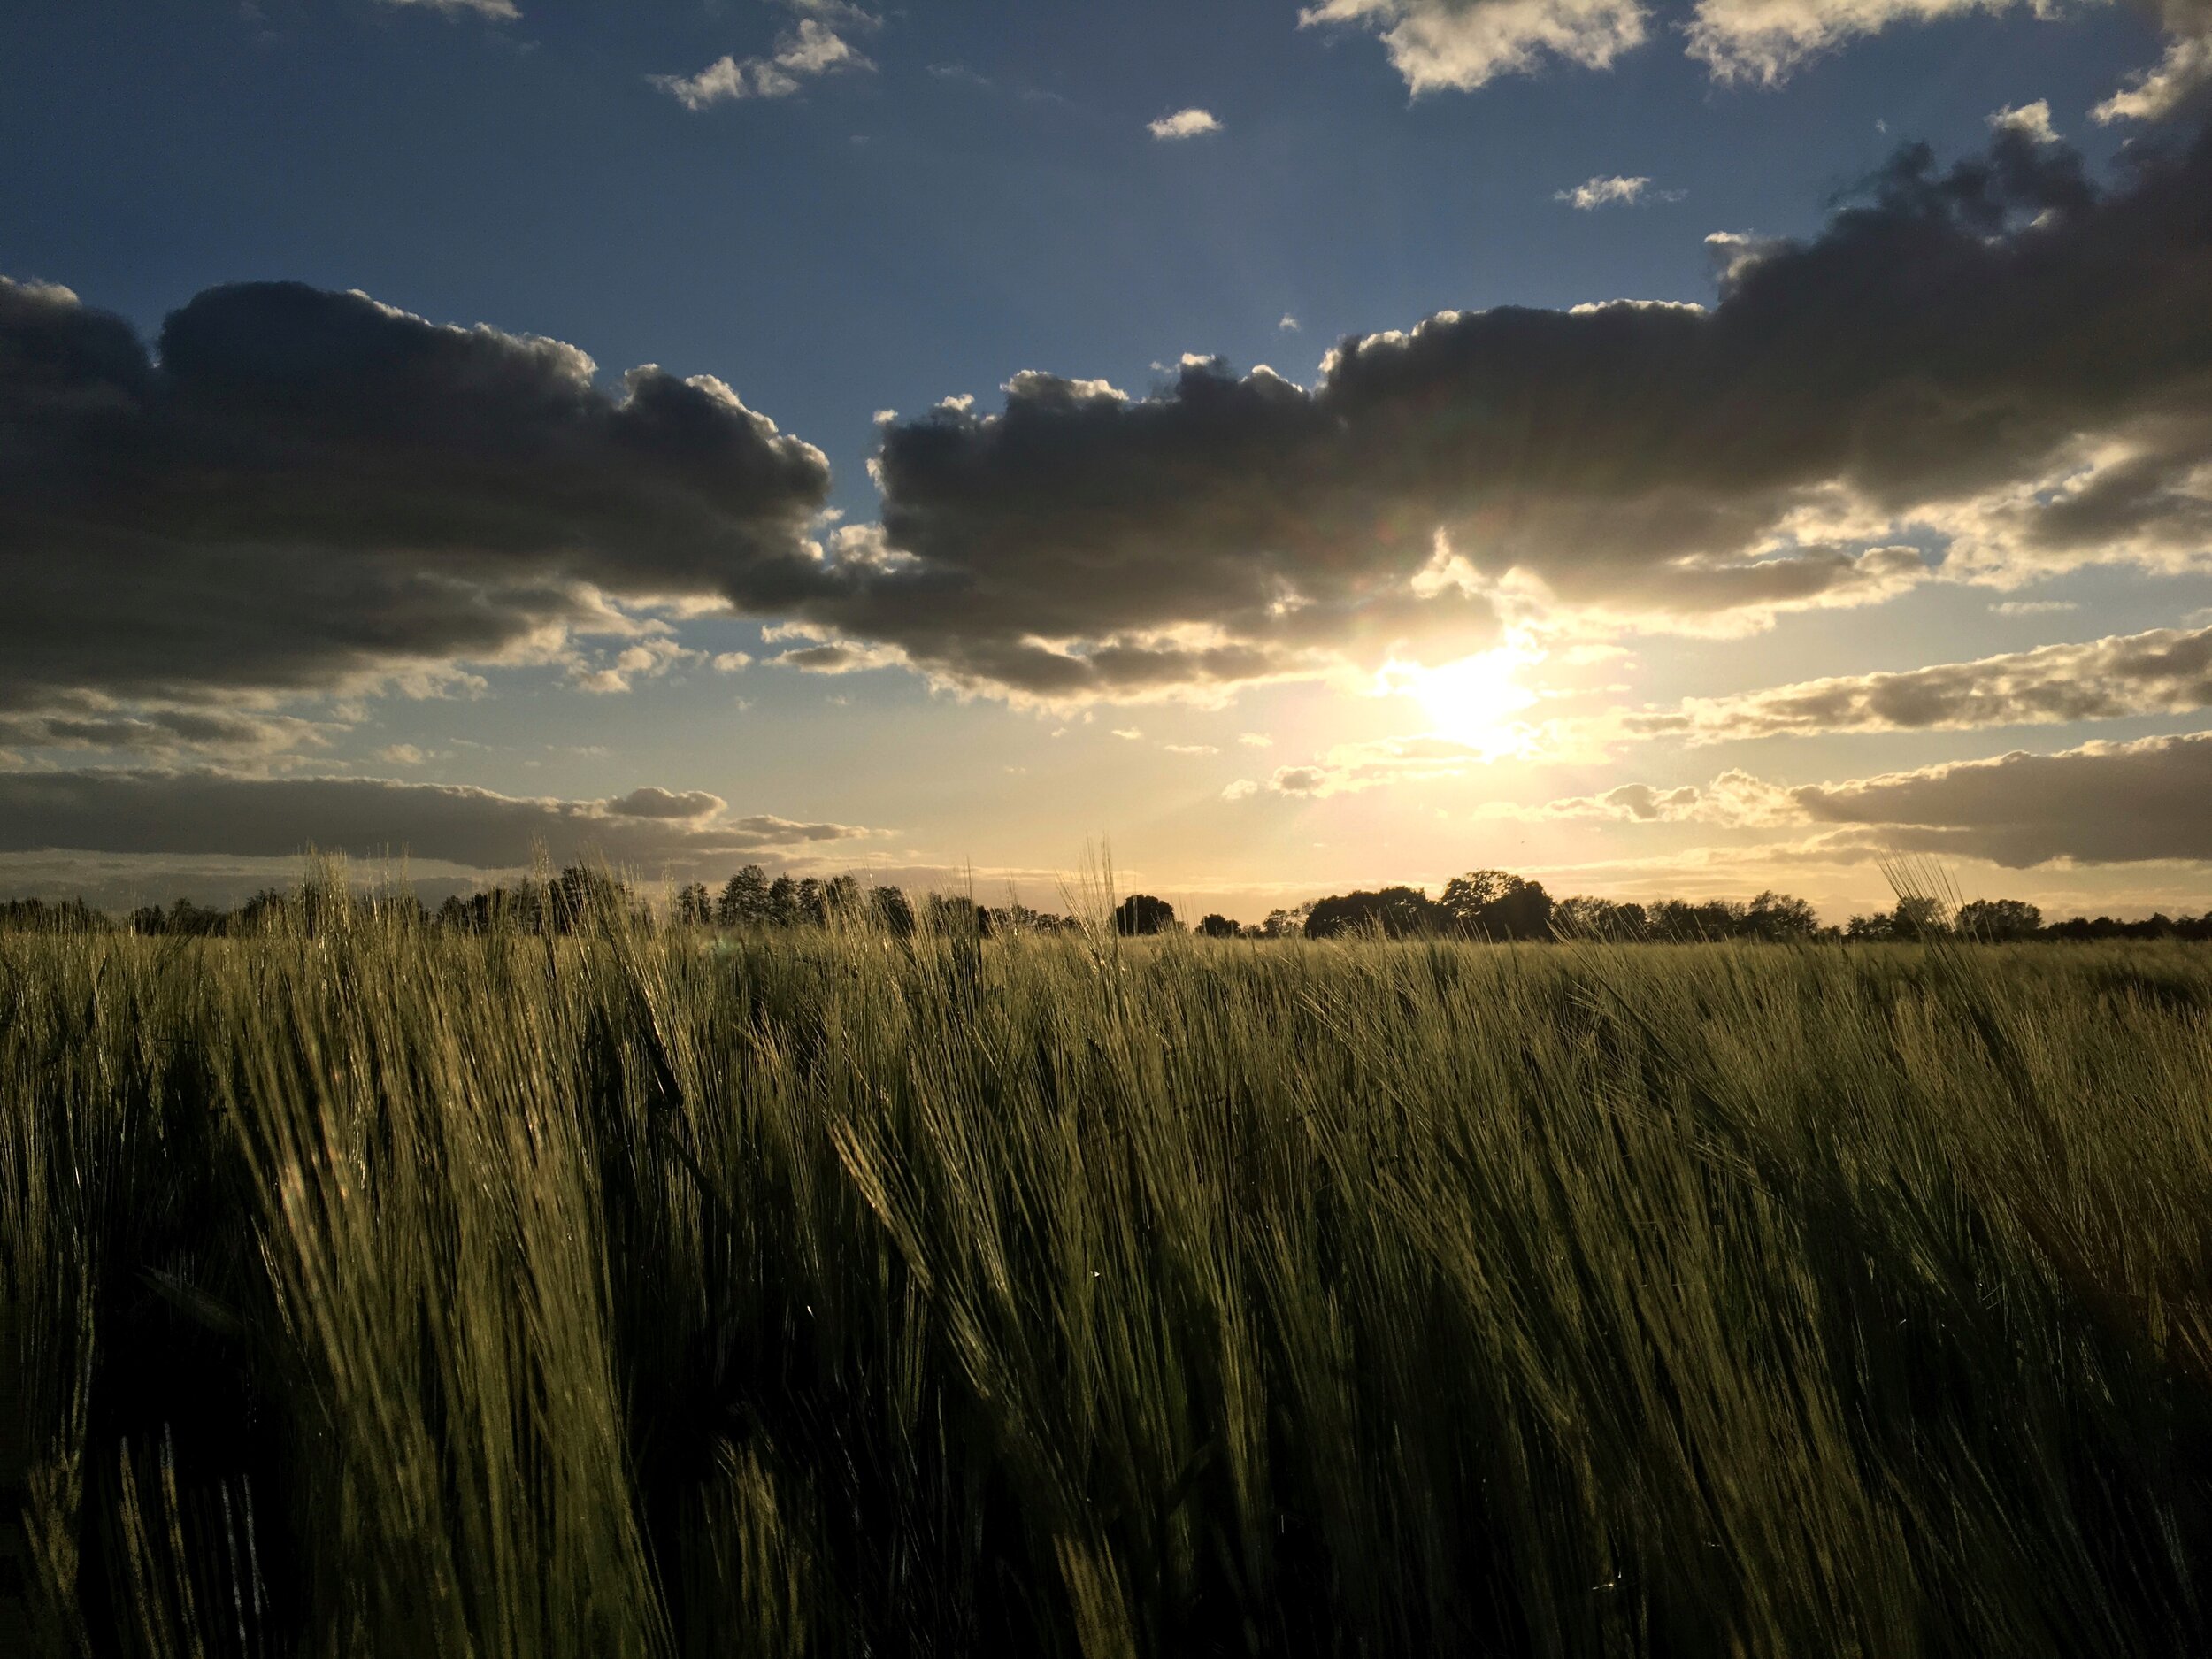 Wheat in the evening sun